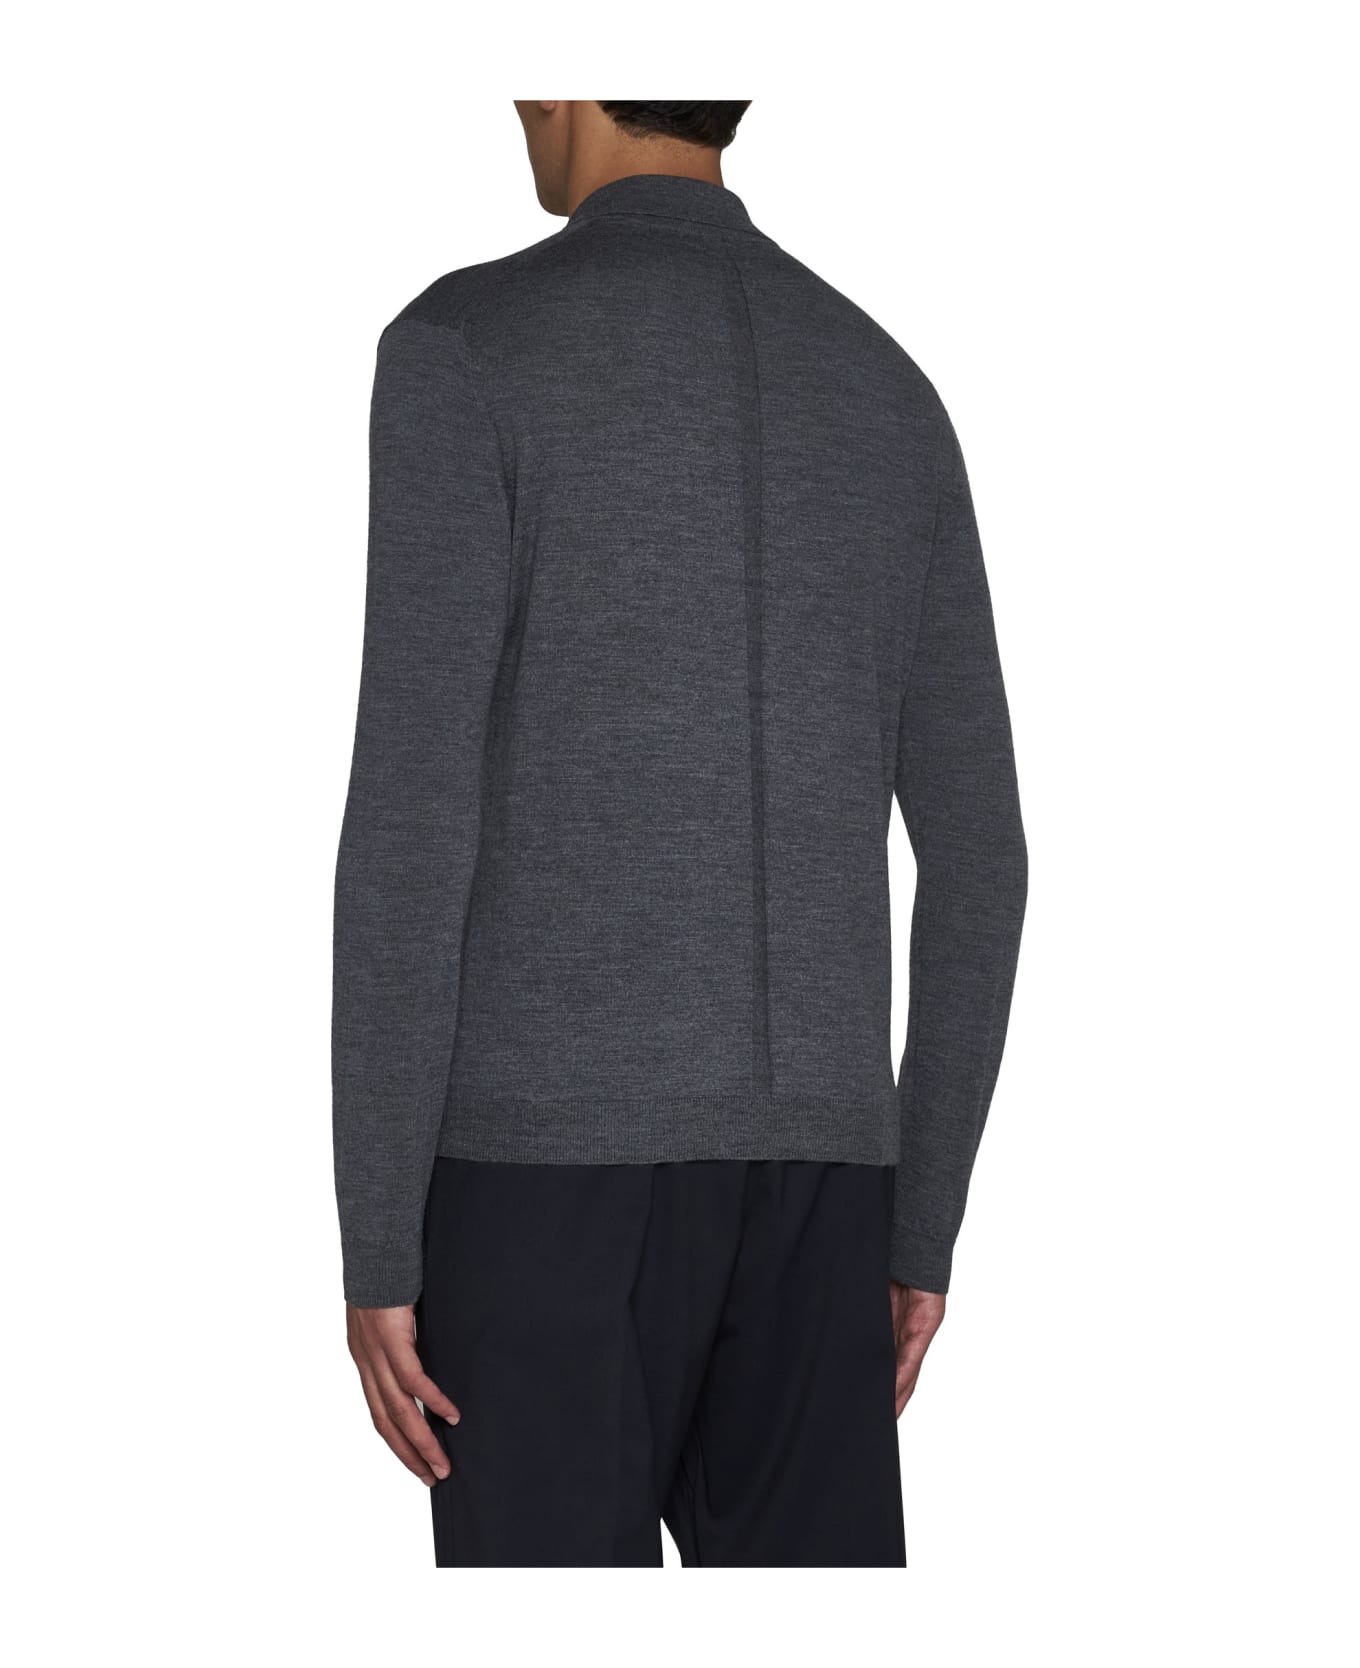 Low Brand Polo Shirt - Mid grey melange ポロシャツ